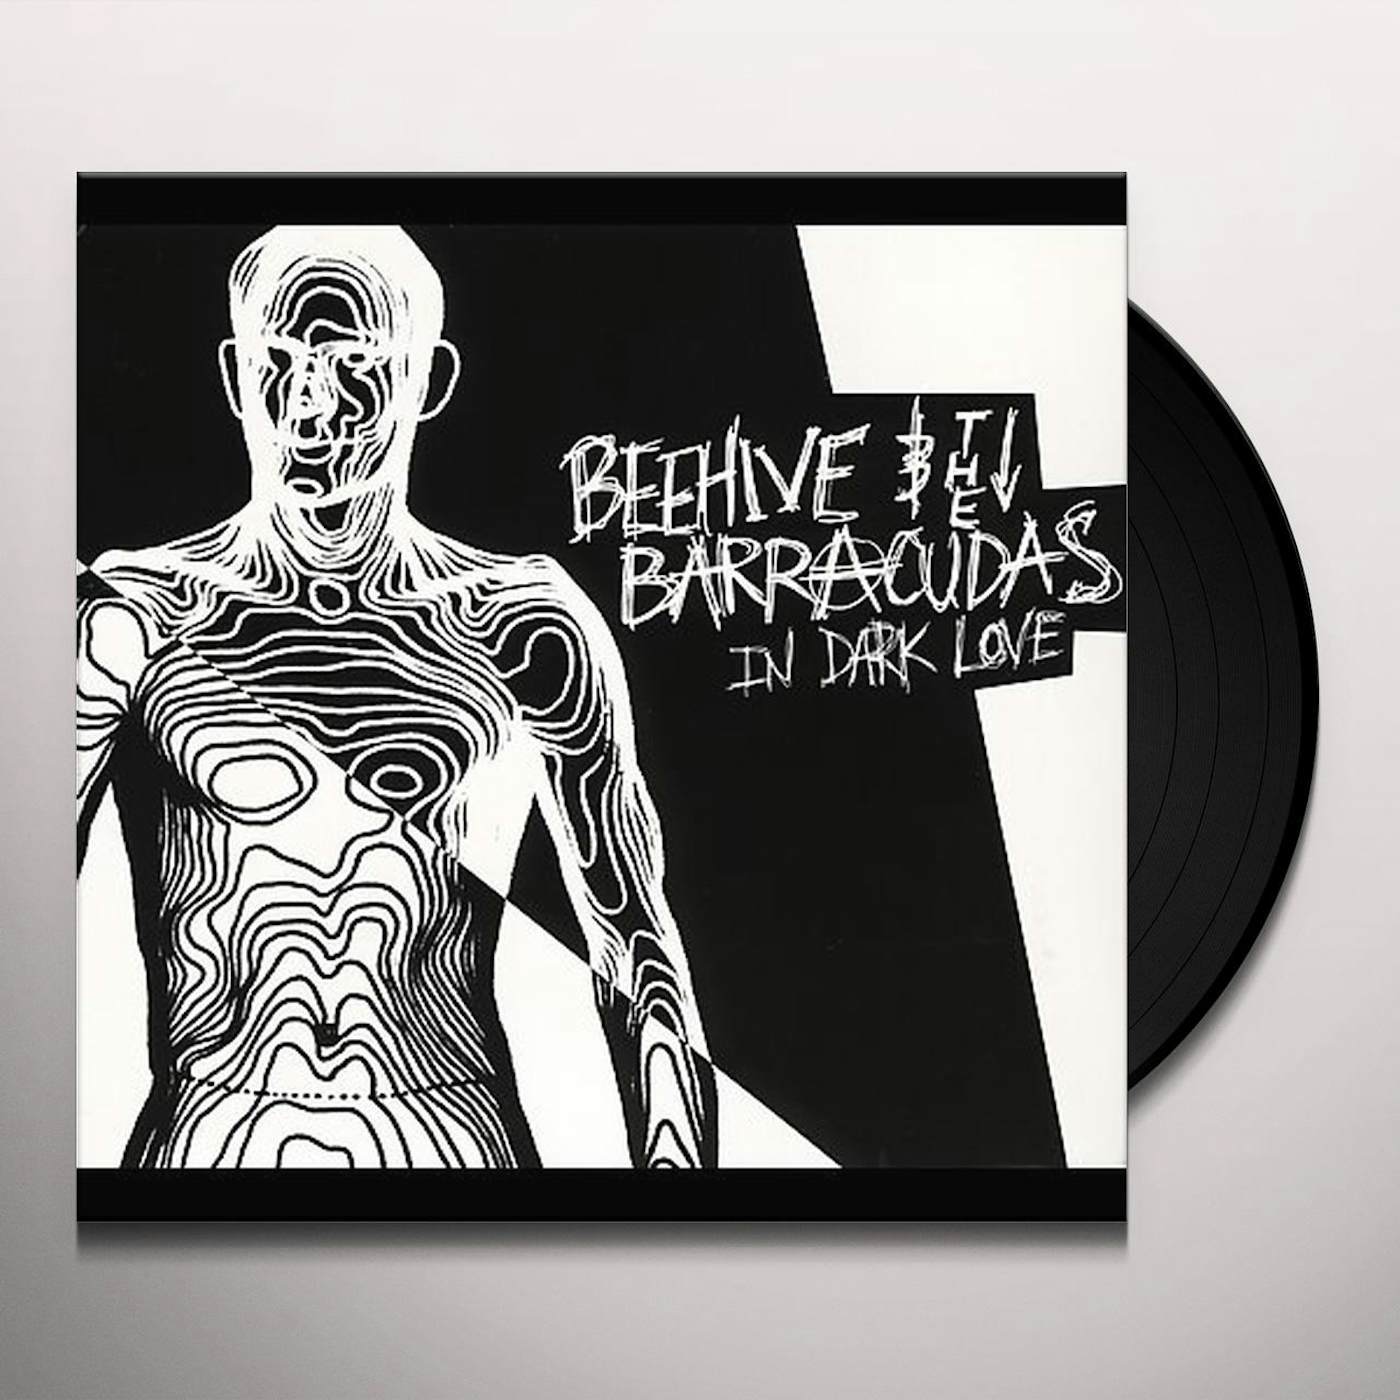 Beehive & Barracudas In Dark Love Vinyl Record